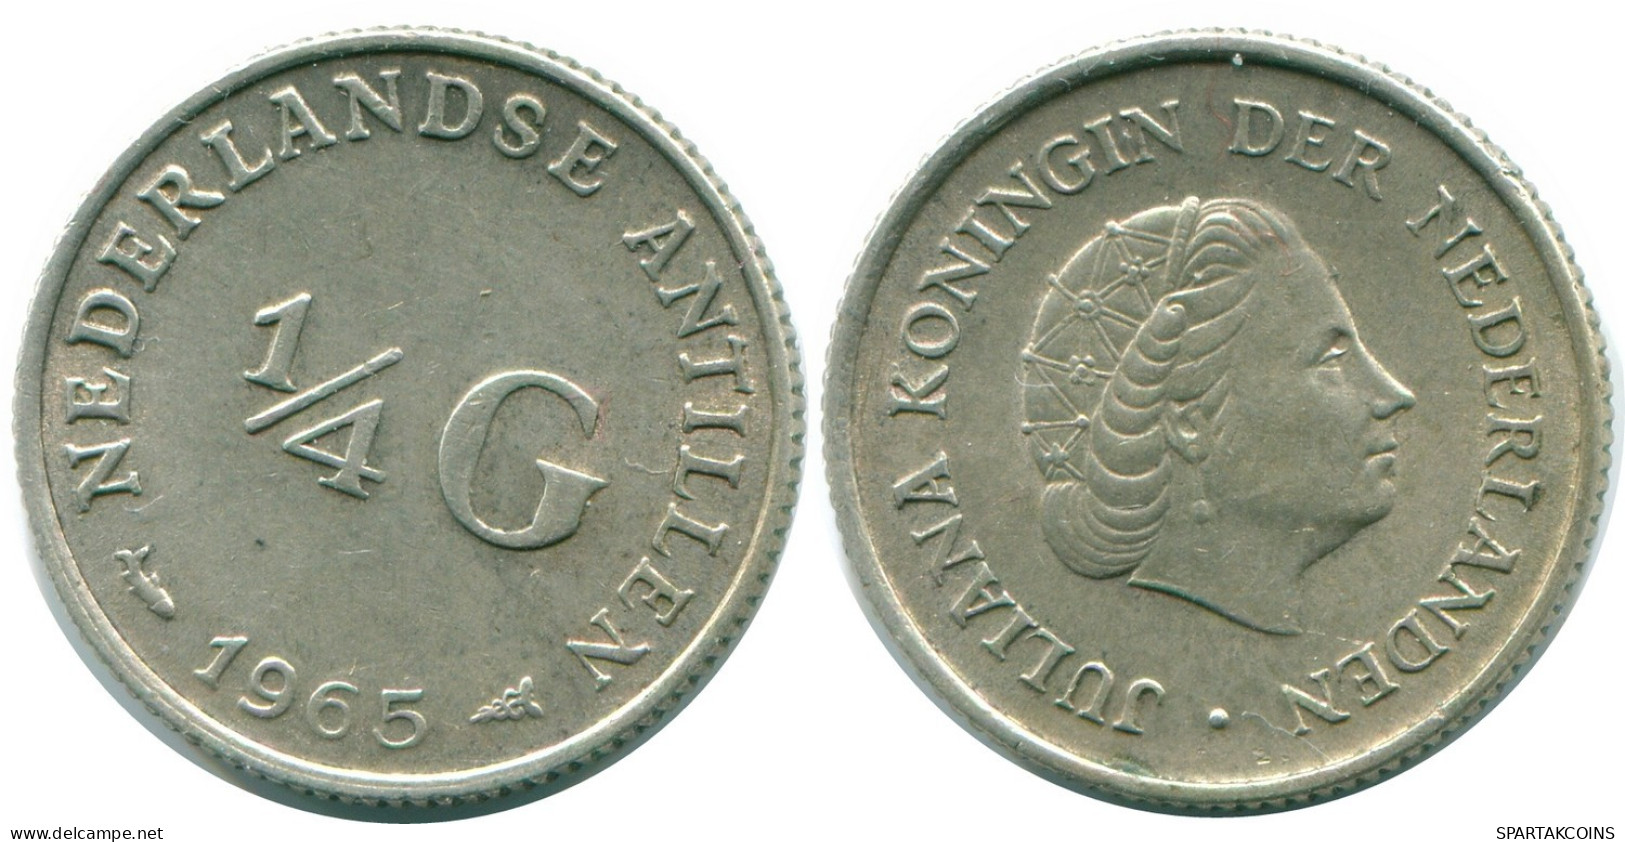 1/4 GULDEN 1965 NIEDERLÄNDISCHE ANTILLEN SILBER Koloniale Münze #NL11422.4.D.A - Netherlands Antilles